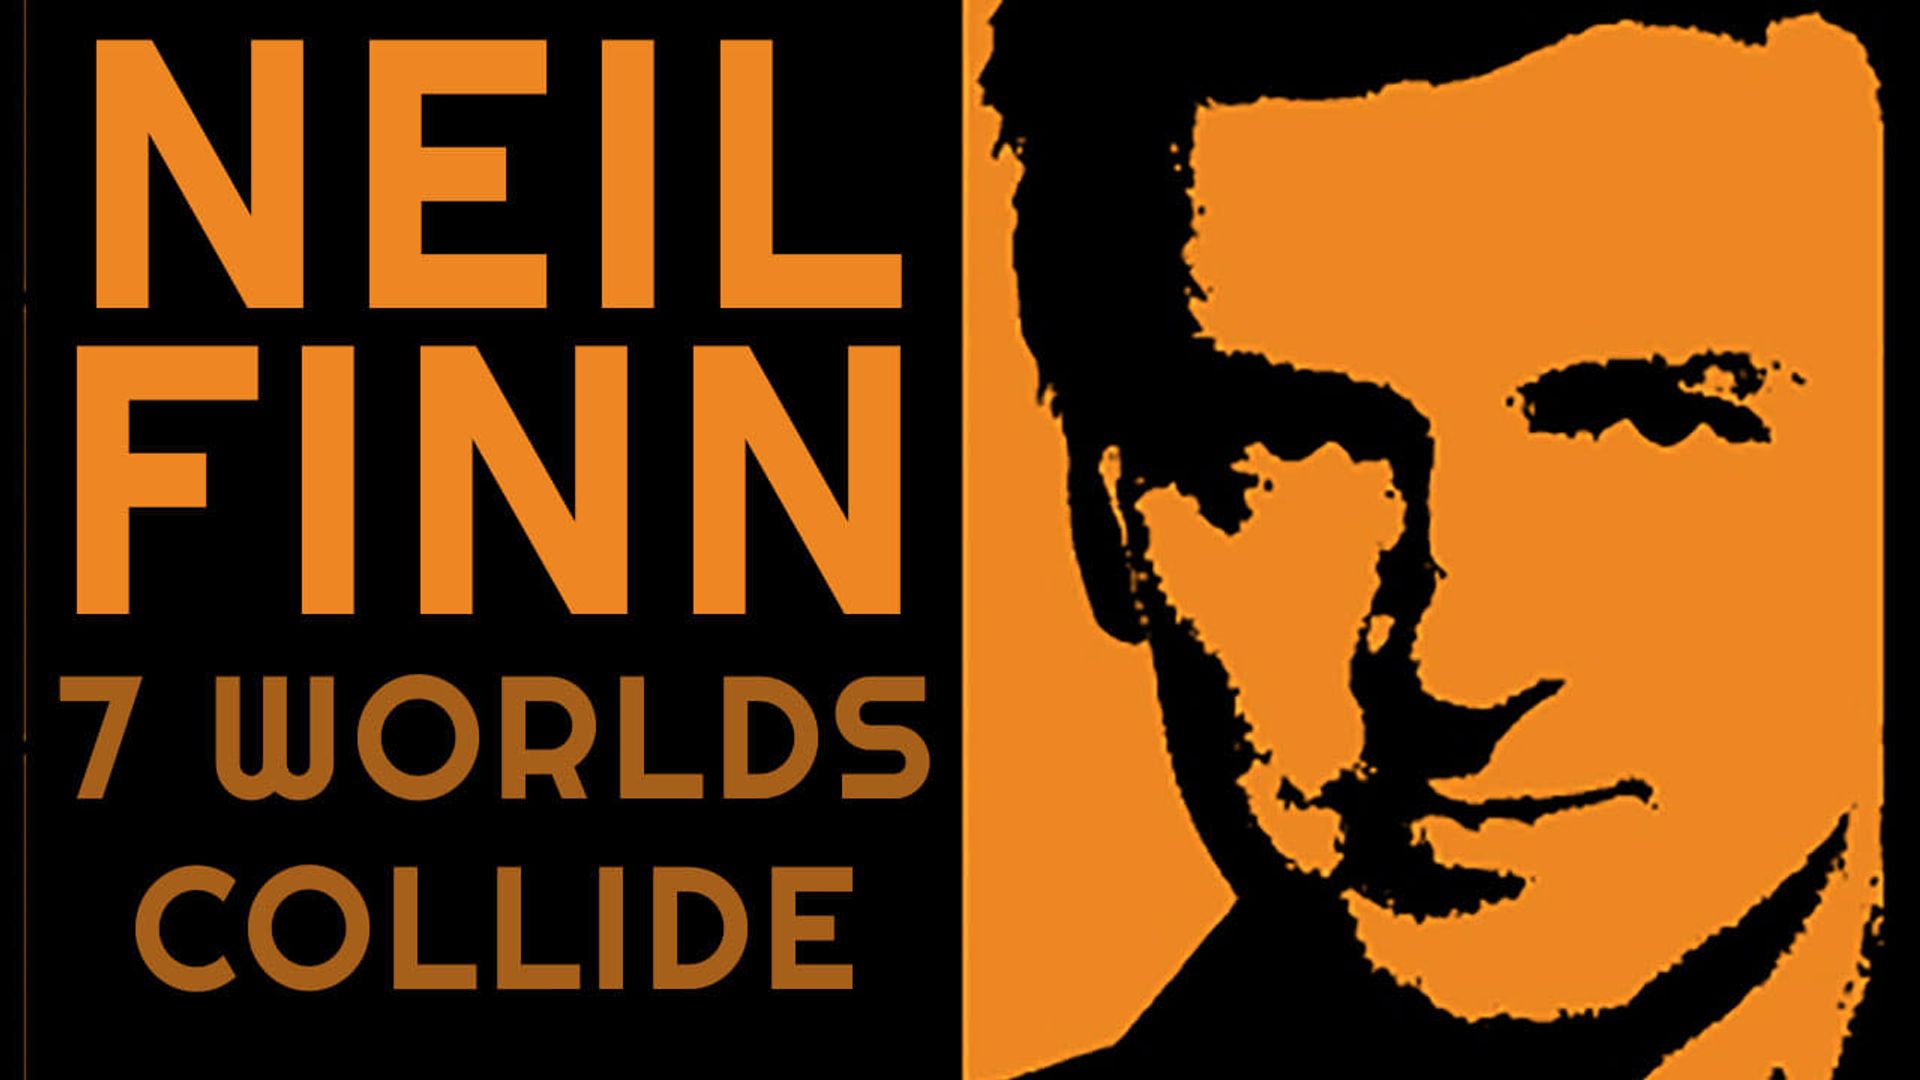 Seven Worlds Collide: Neil Finn & Friends Live at the St. James background